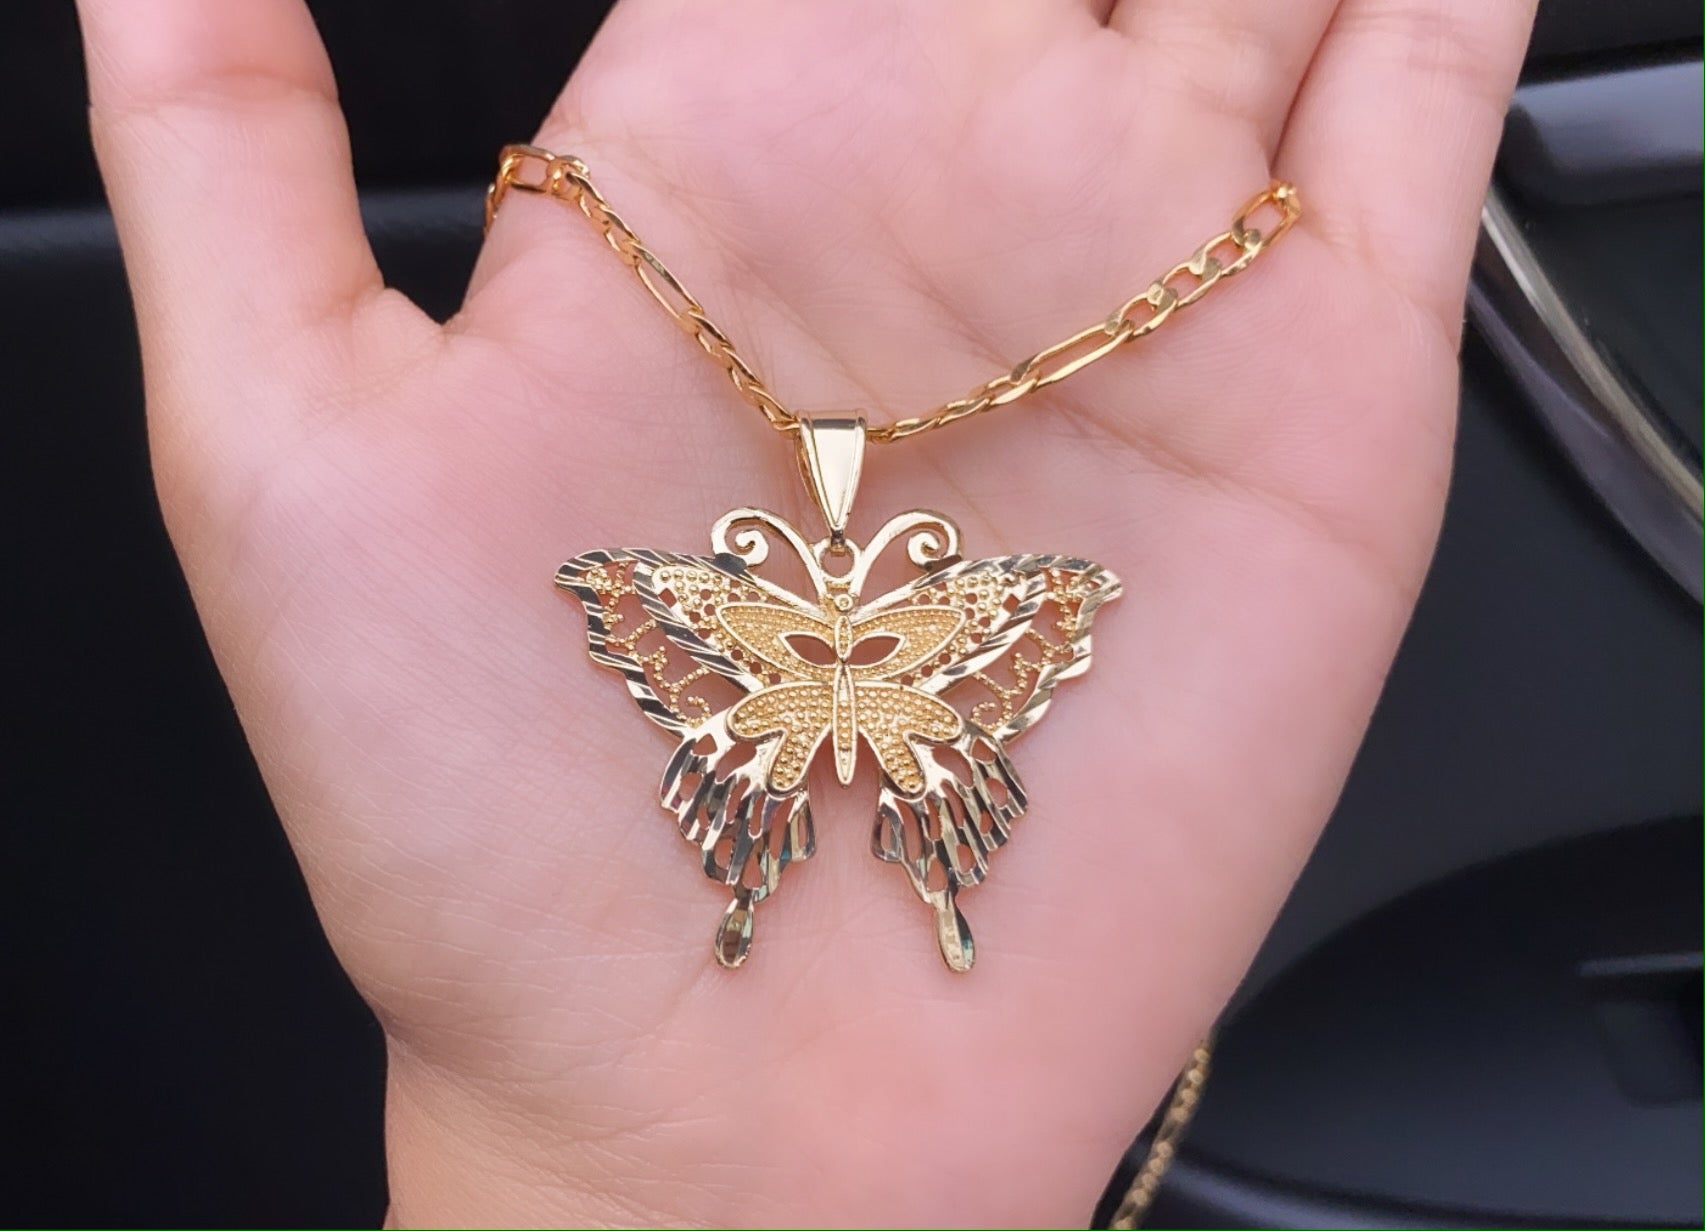 Unique butterfly necklace